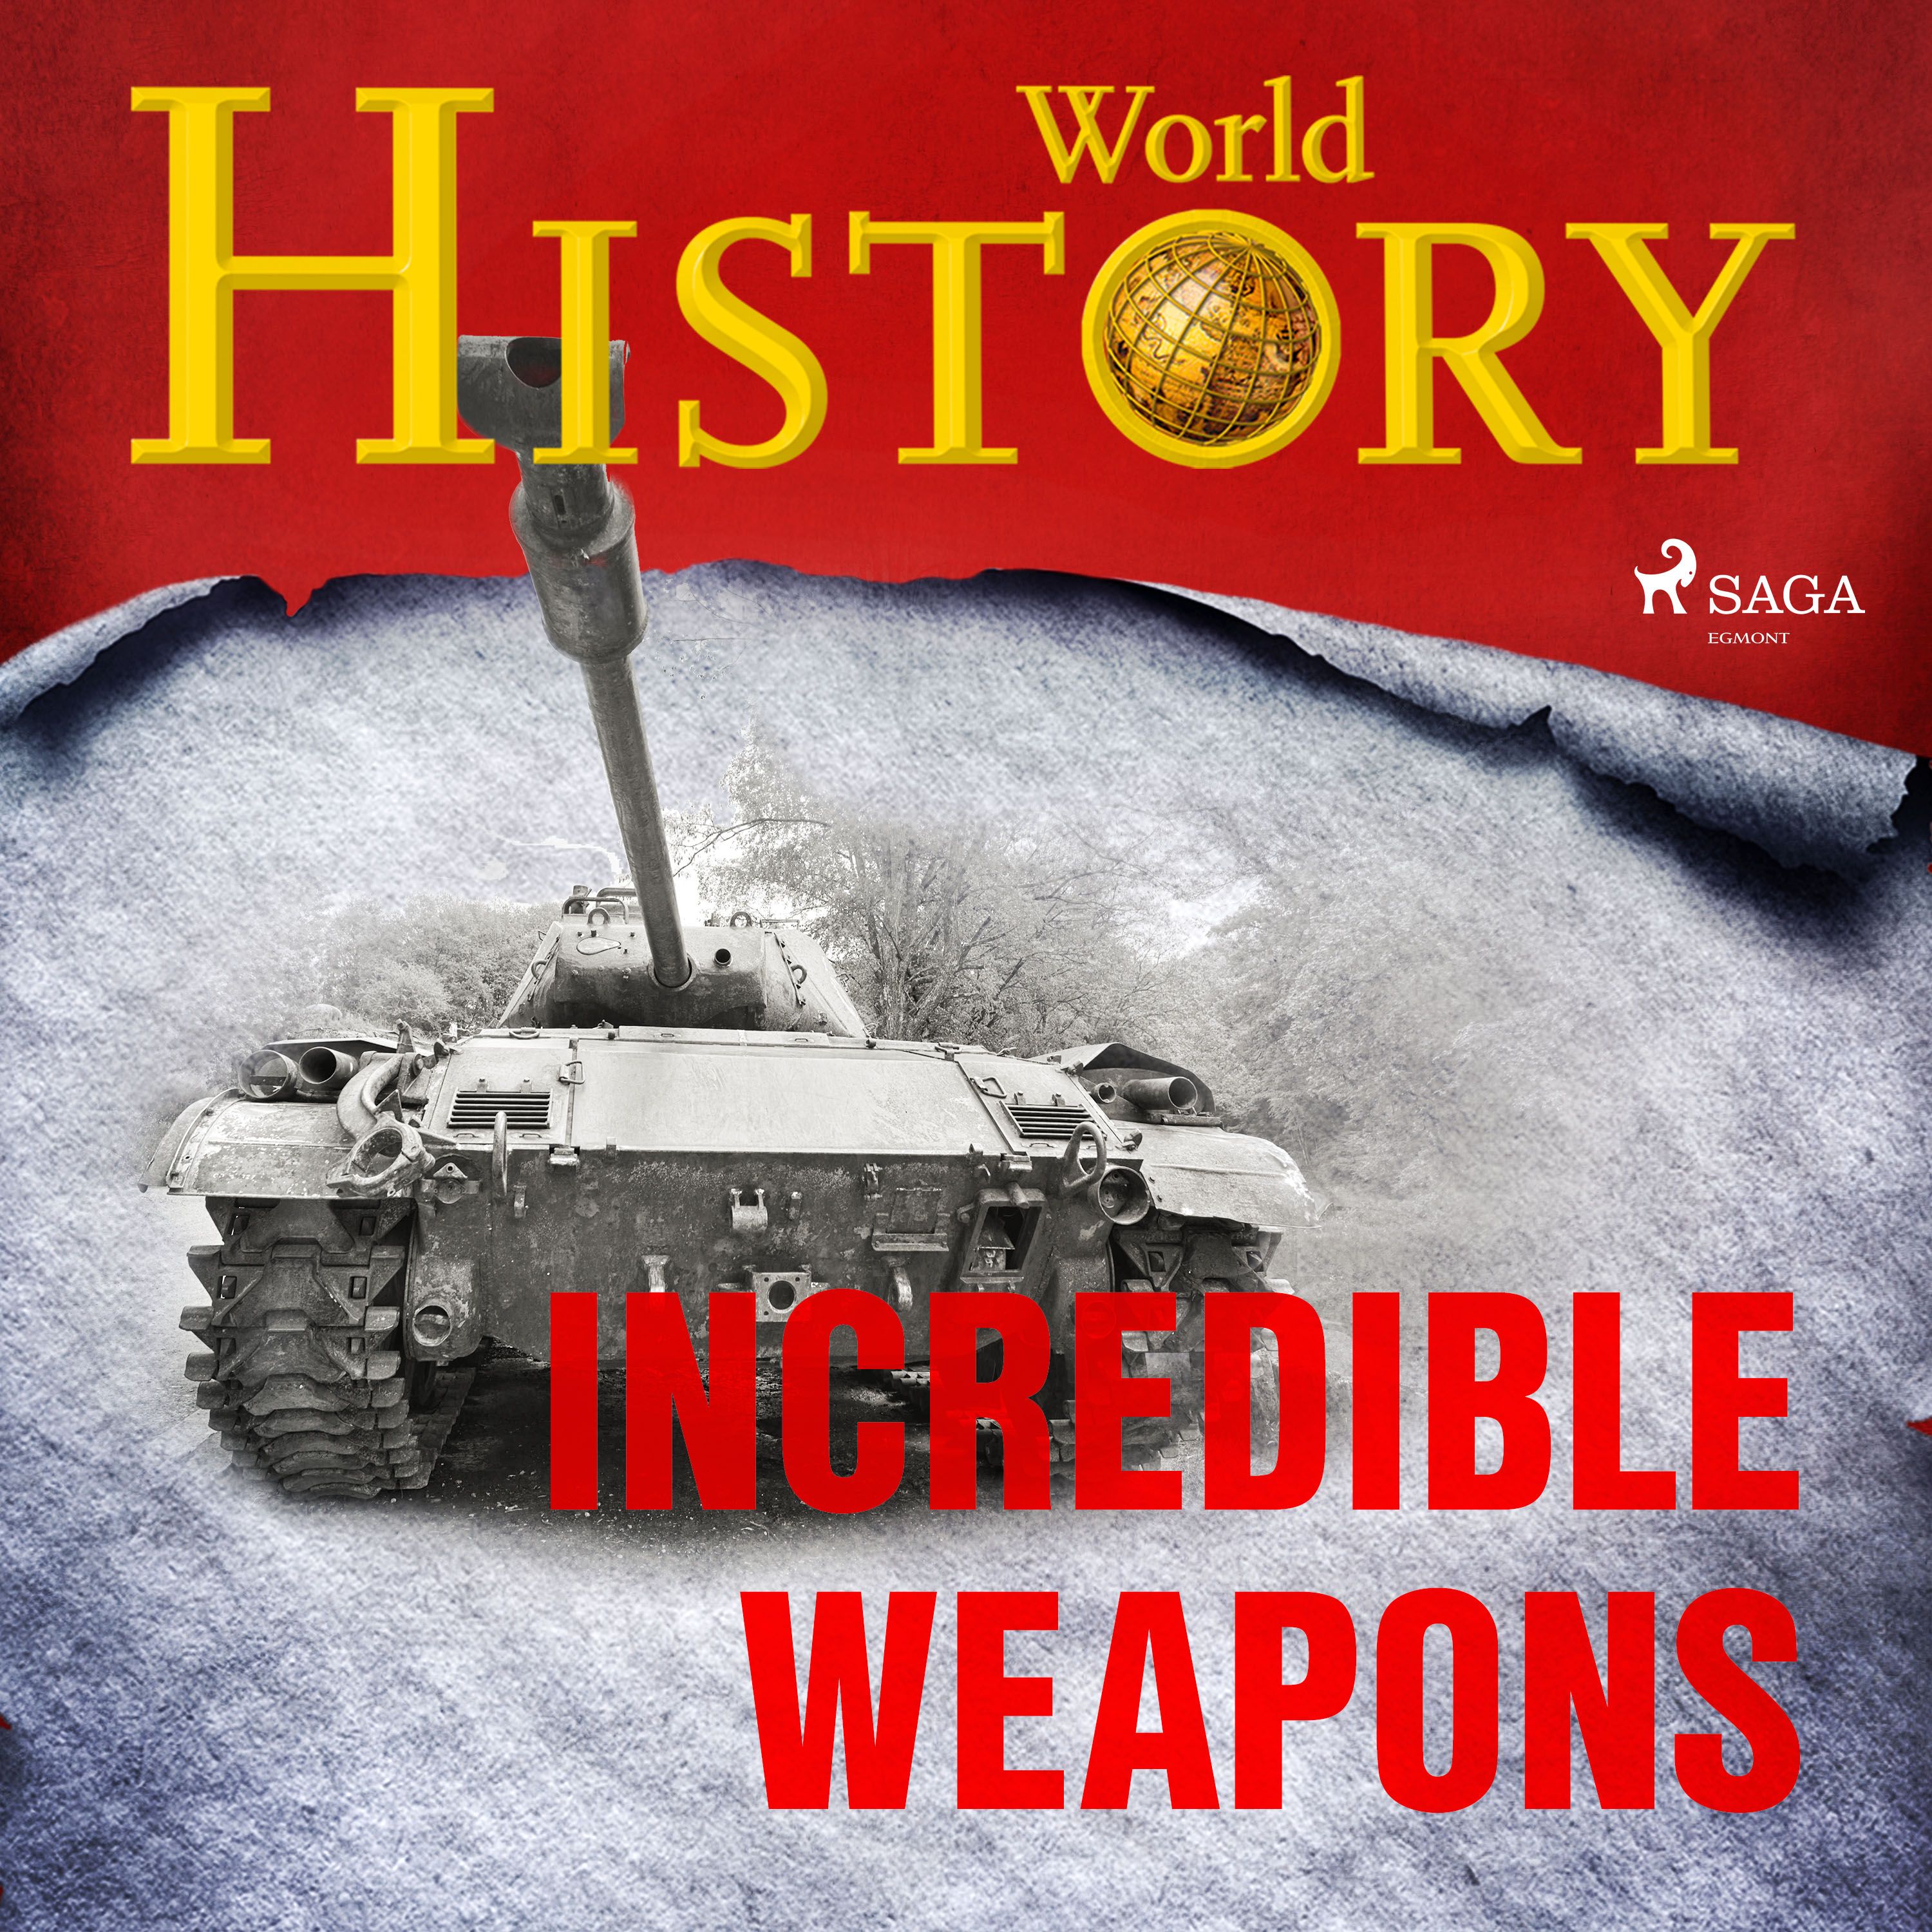 Incredible Weapons, lydbog af World History